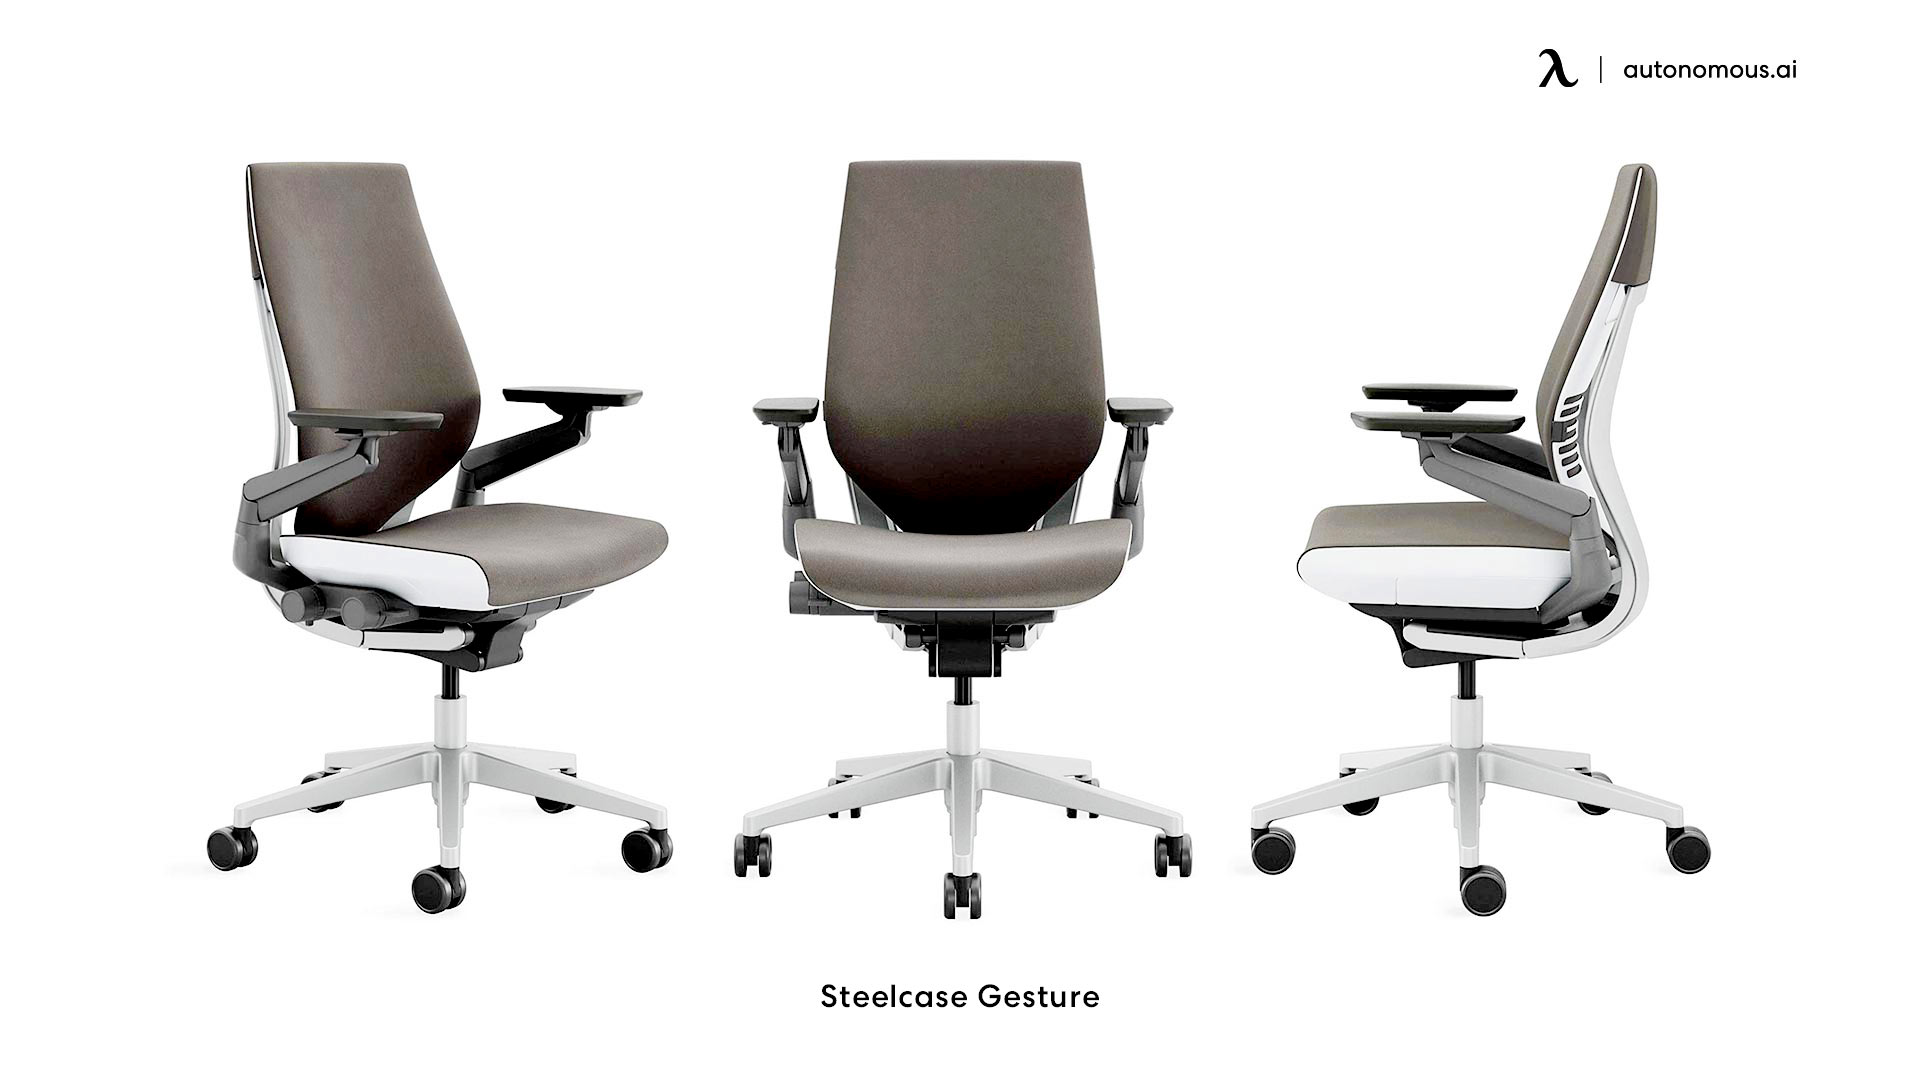 Gesture Chair by Steelcase